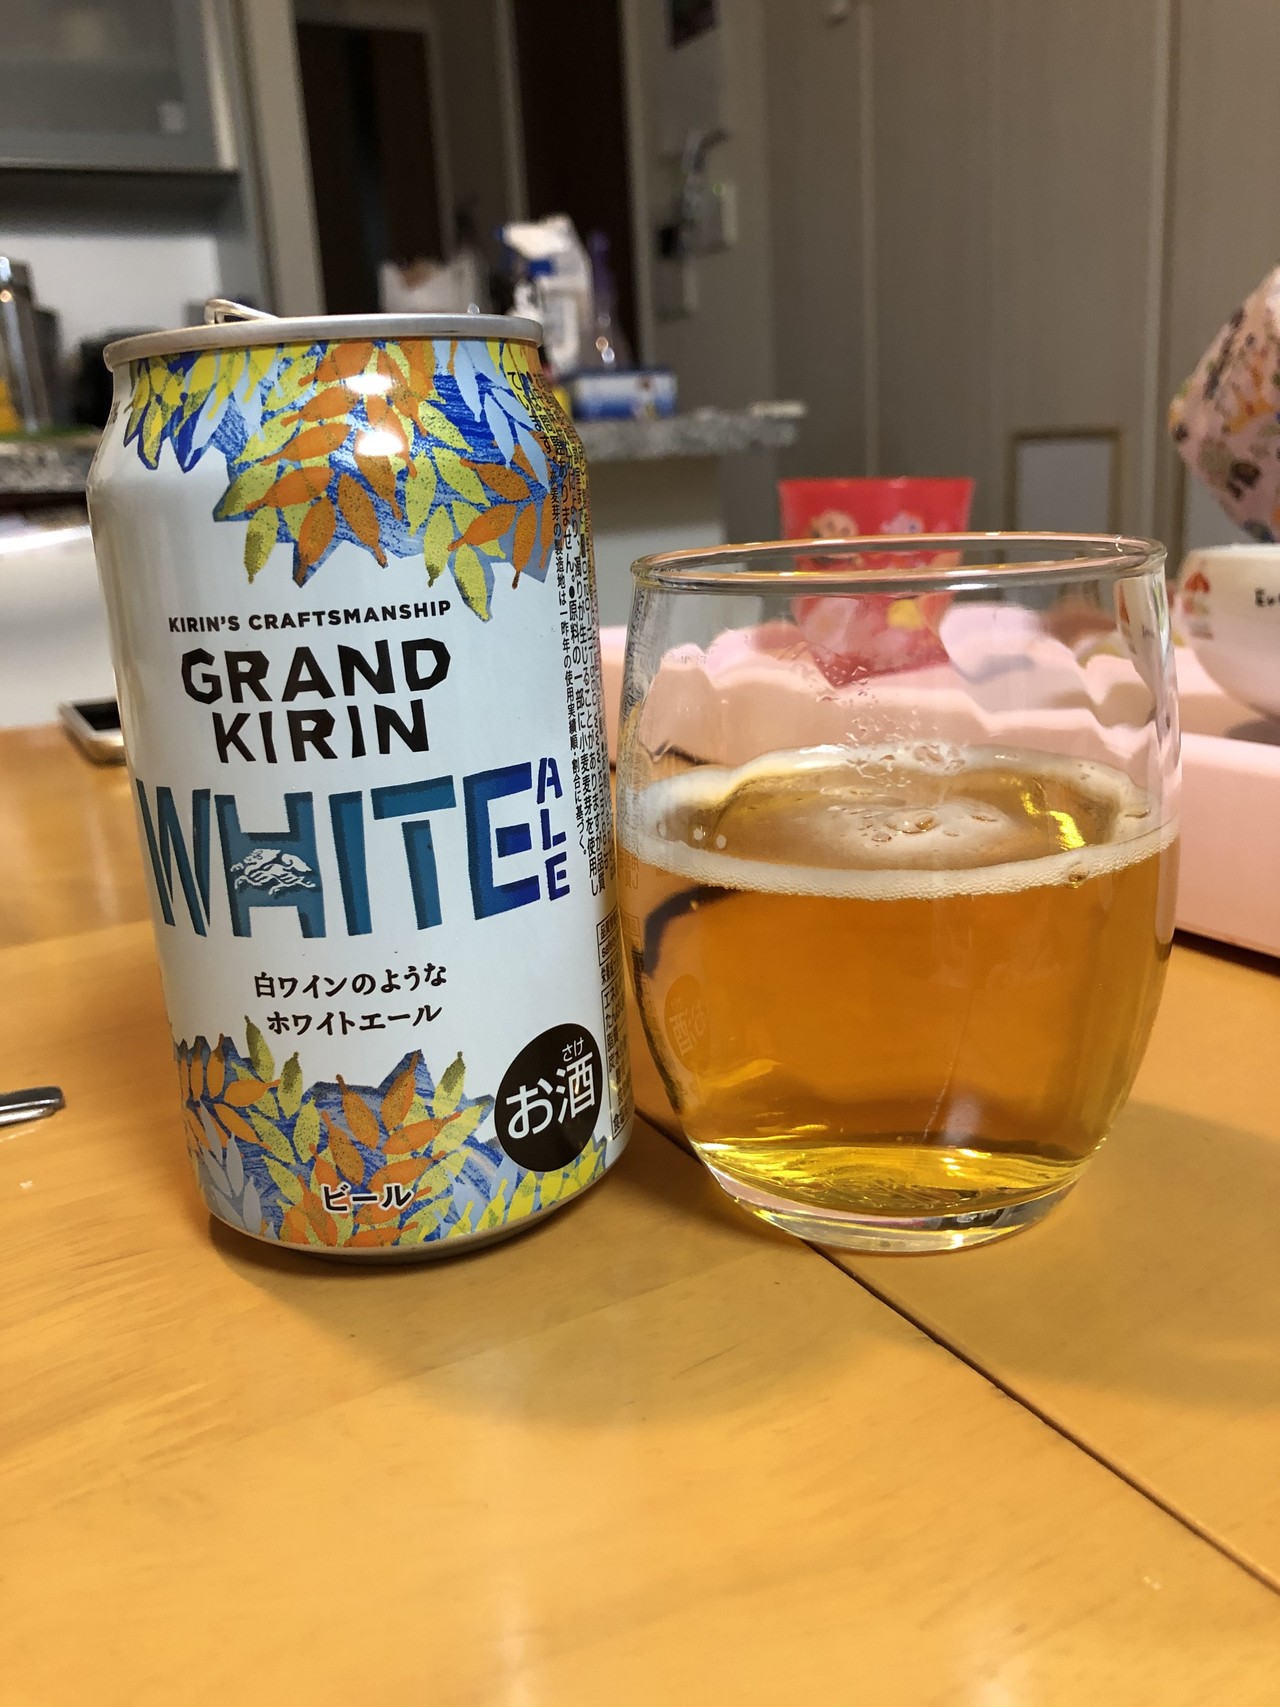 Grand Kirin White Ale Yuichi Note